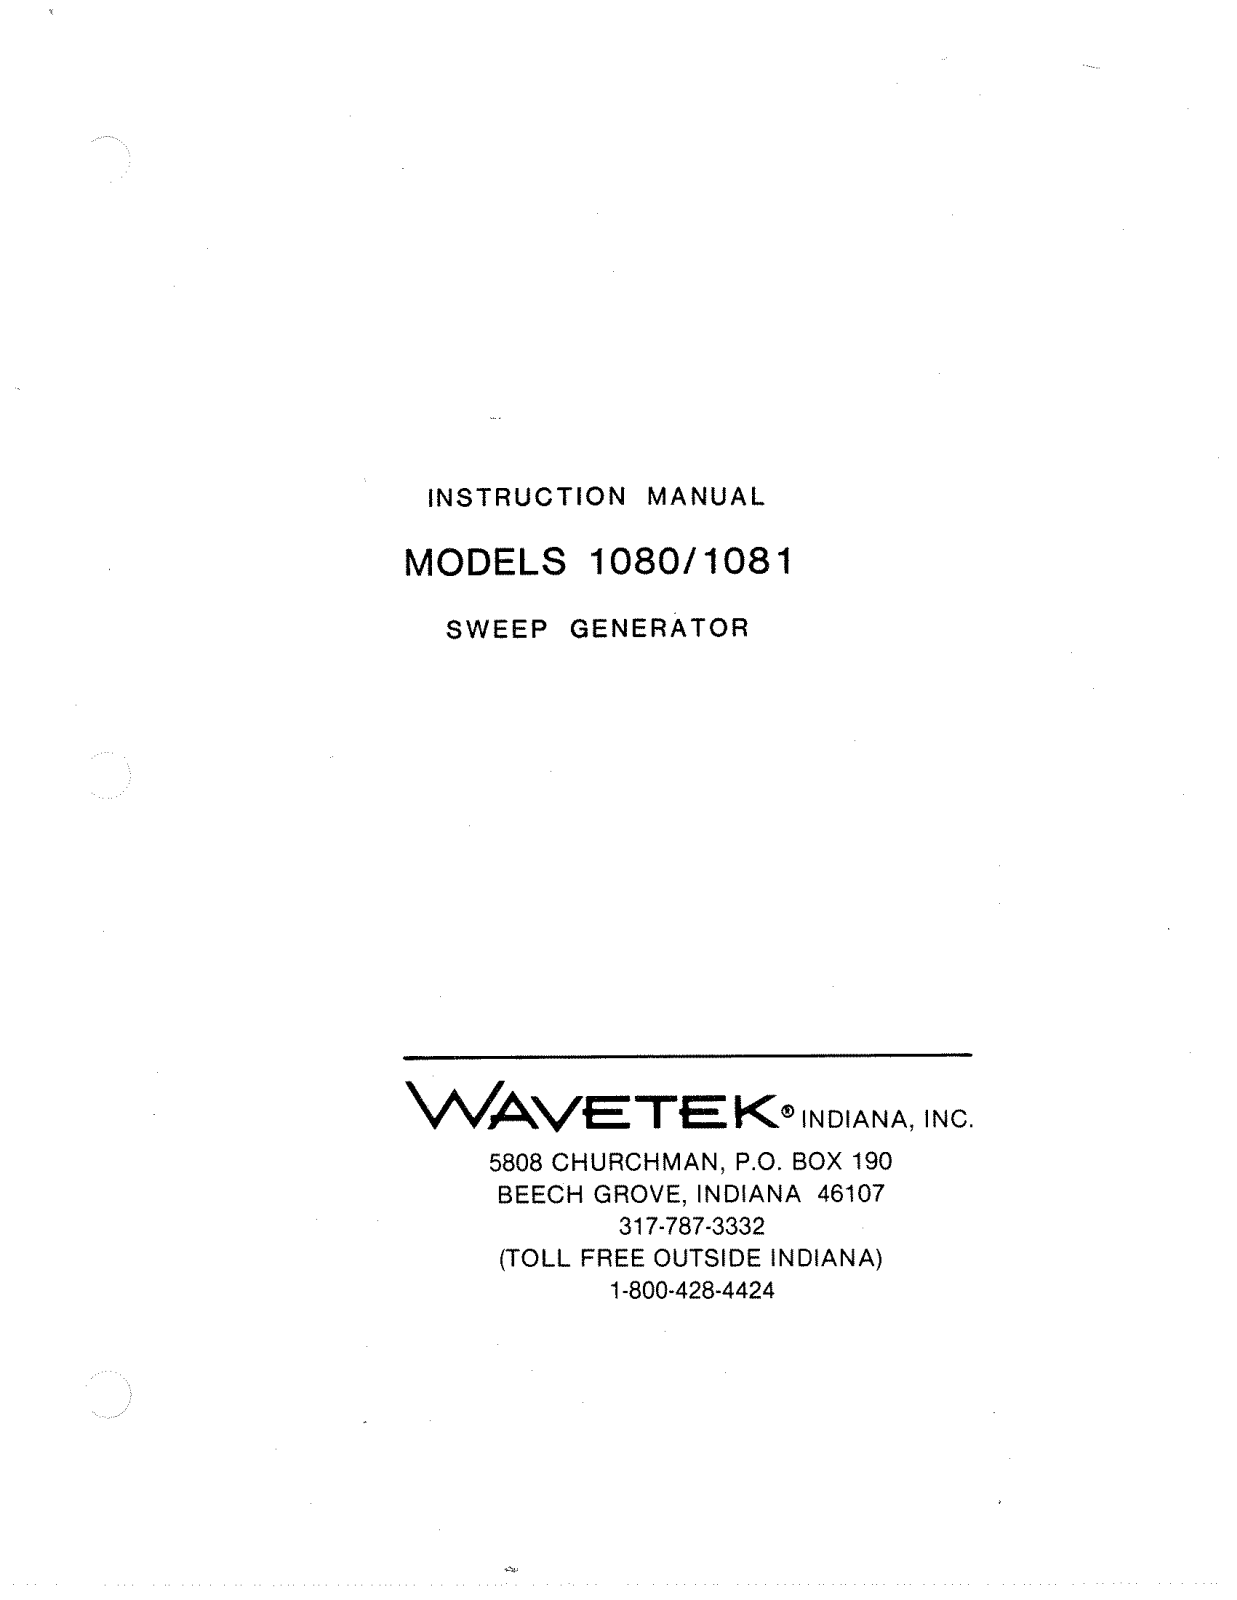 Wavetek 1081, 1080 Service manual